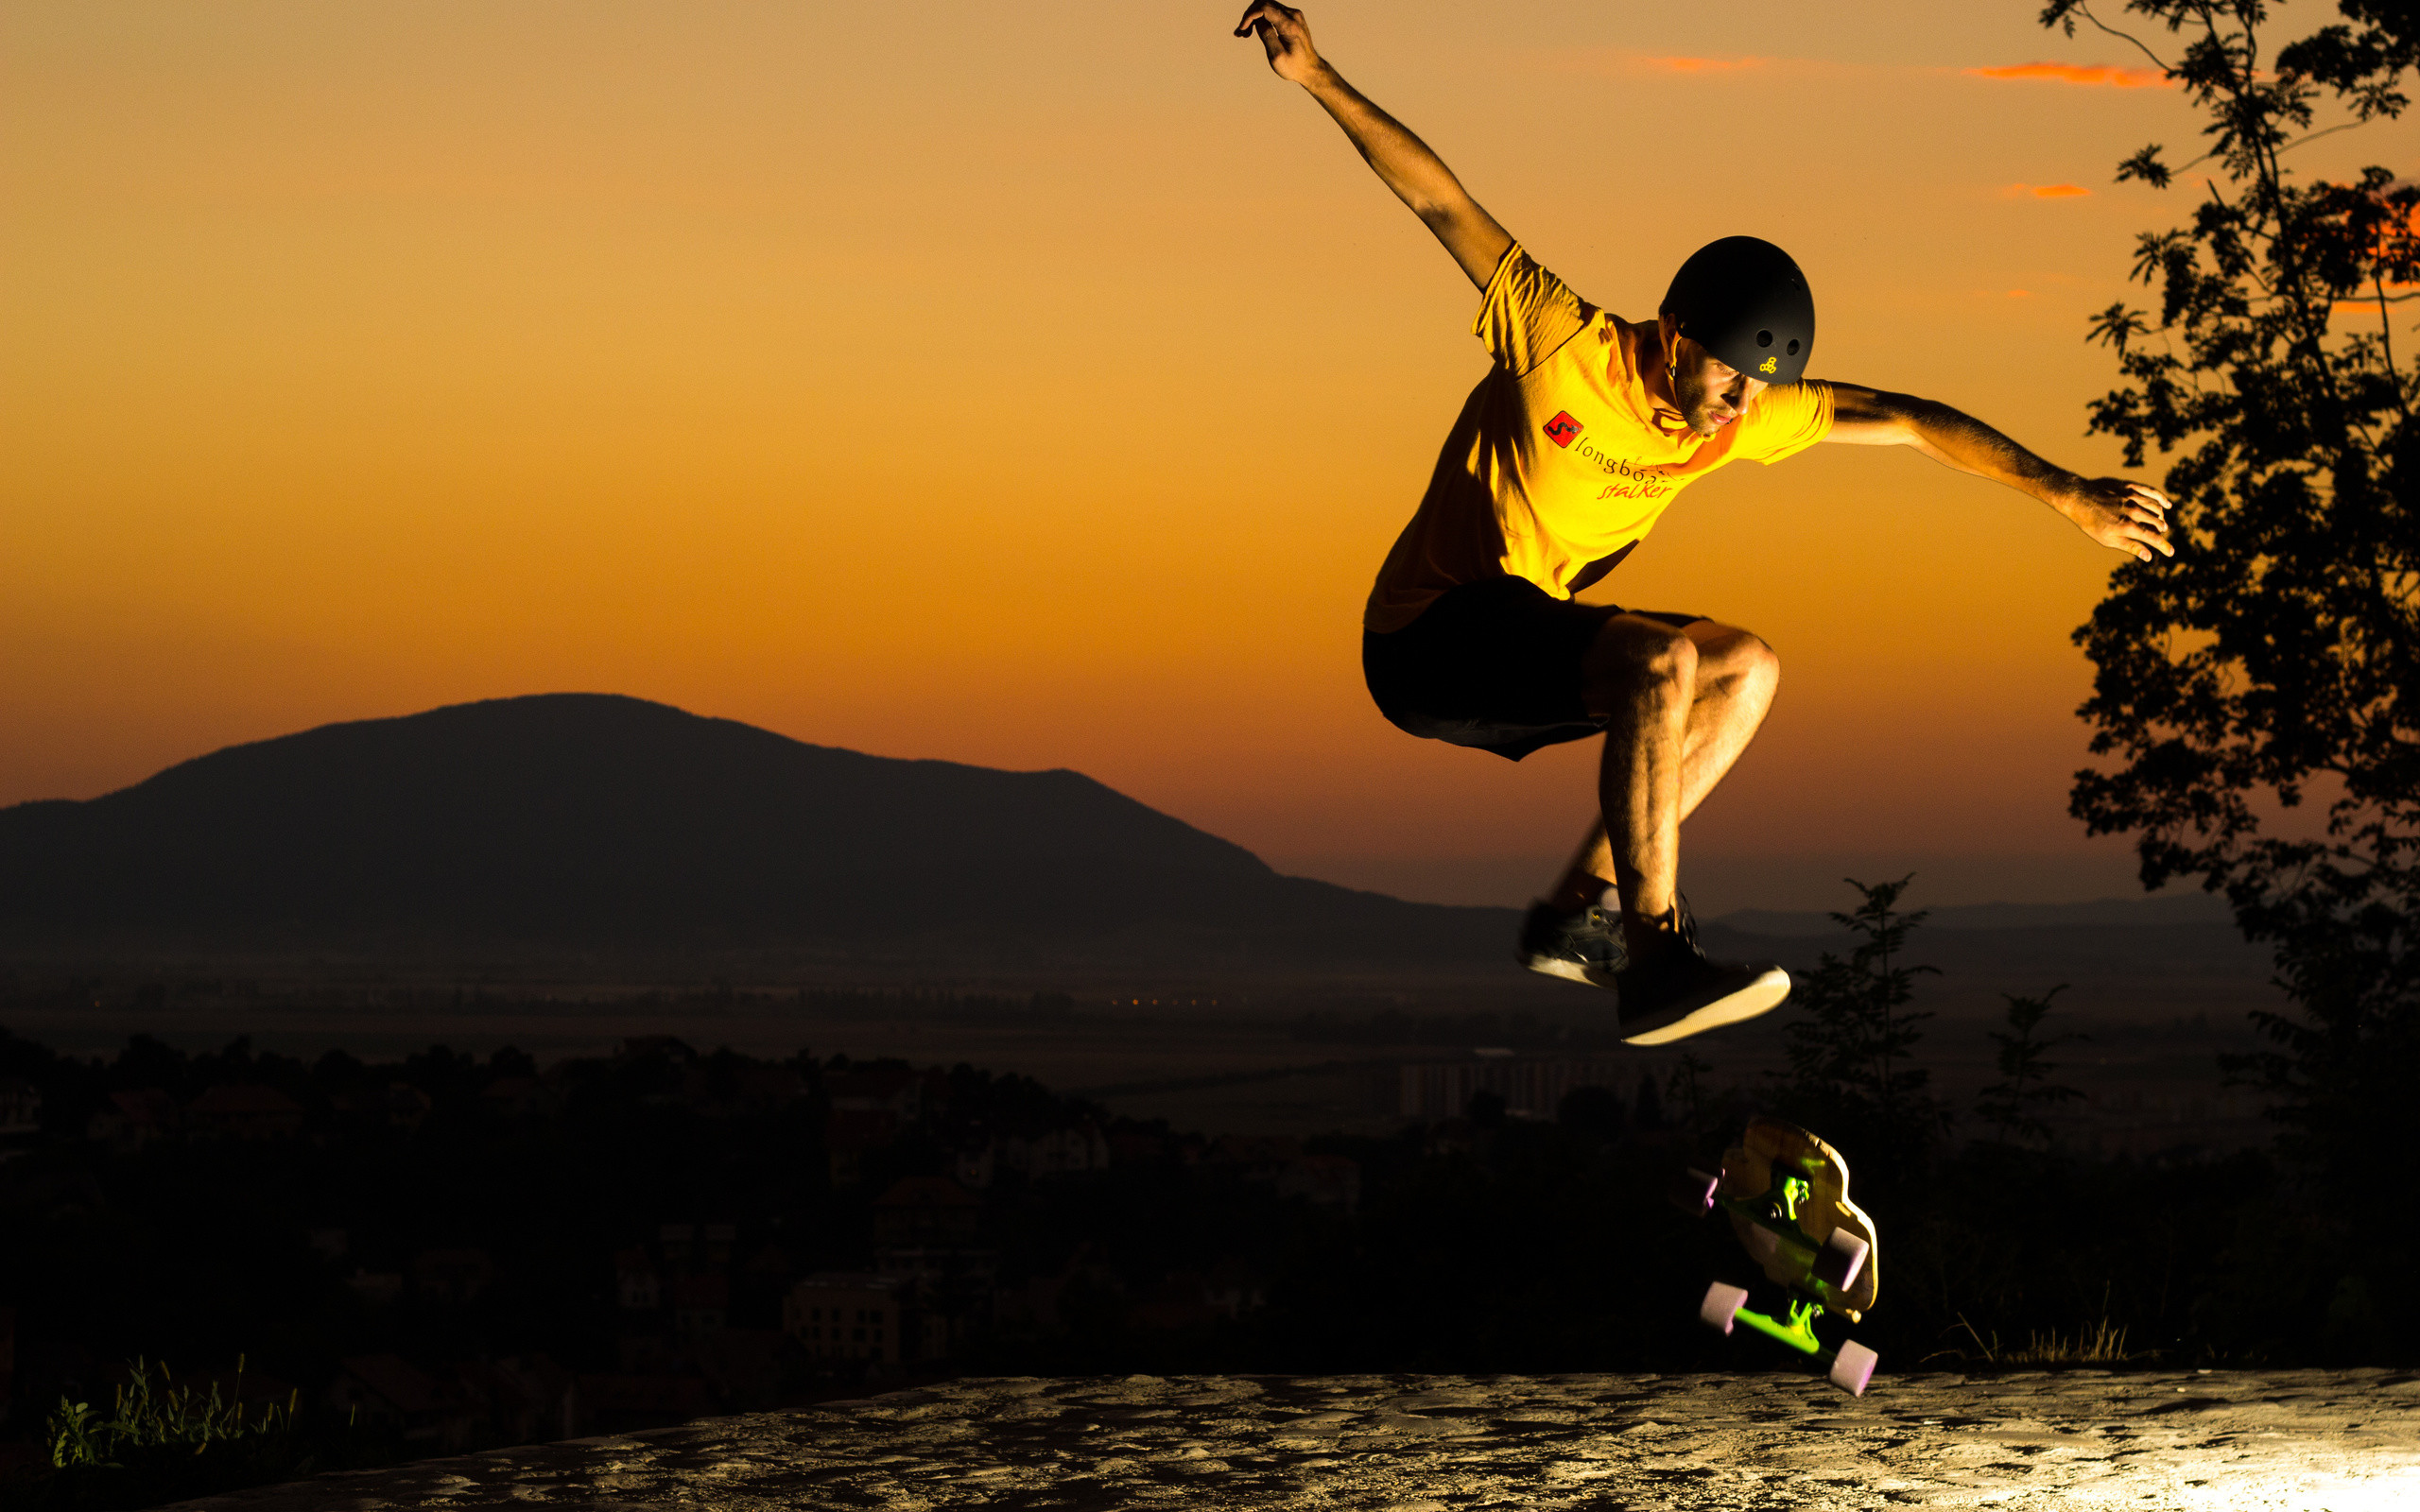 2560x1600 Jump sunset skate helmet man skateboard skateboarding wallpaper |   | 136024 | WallpaperUP